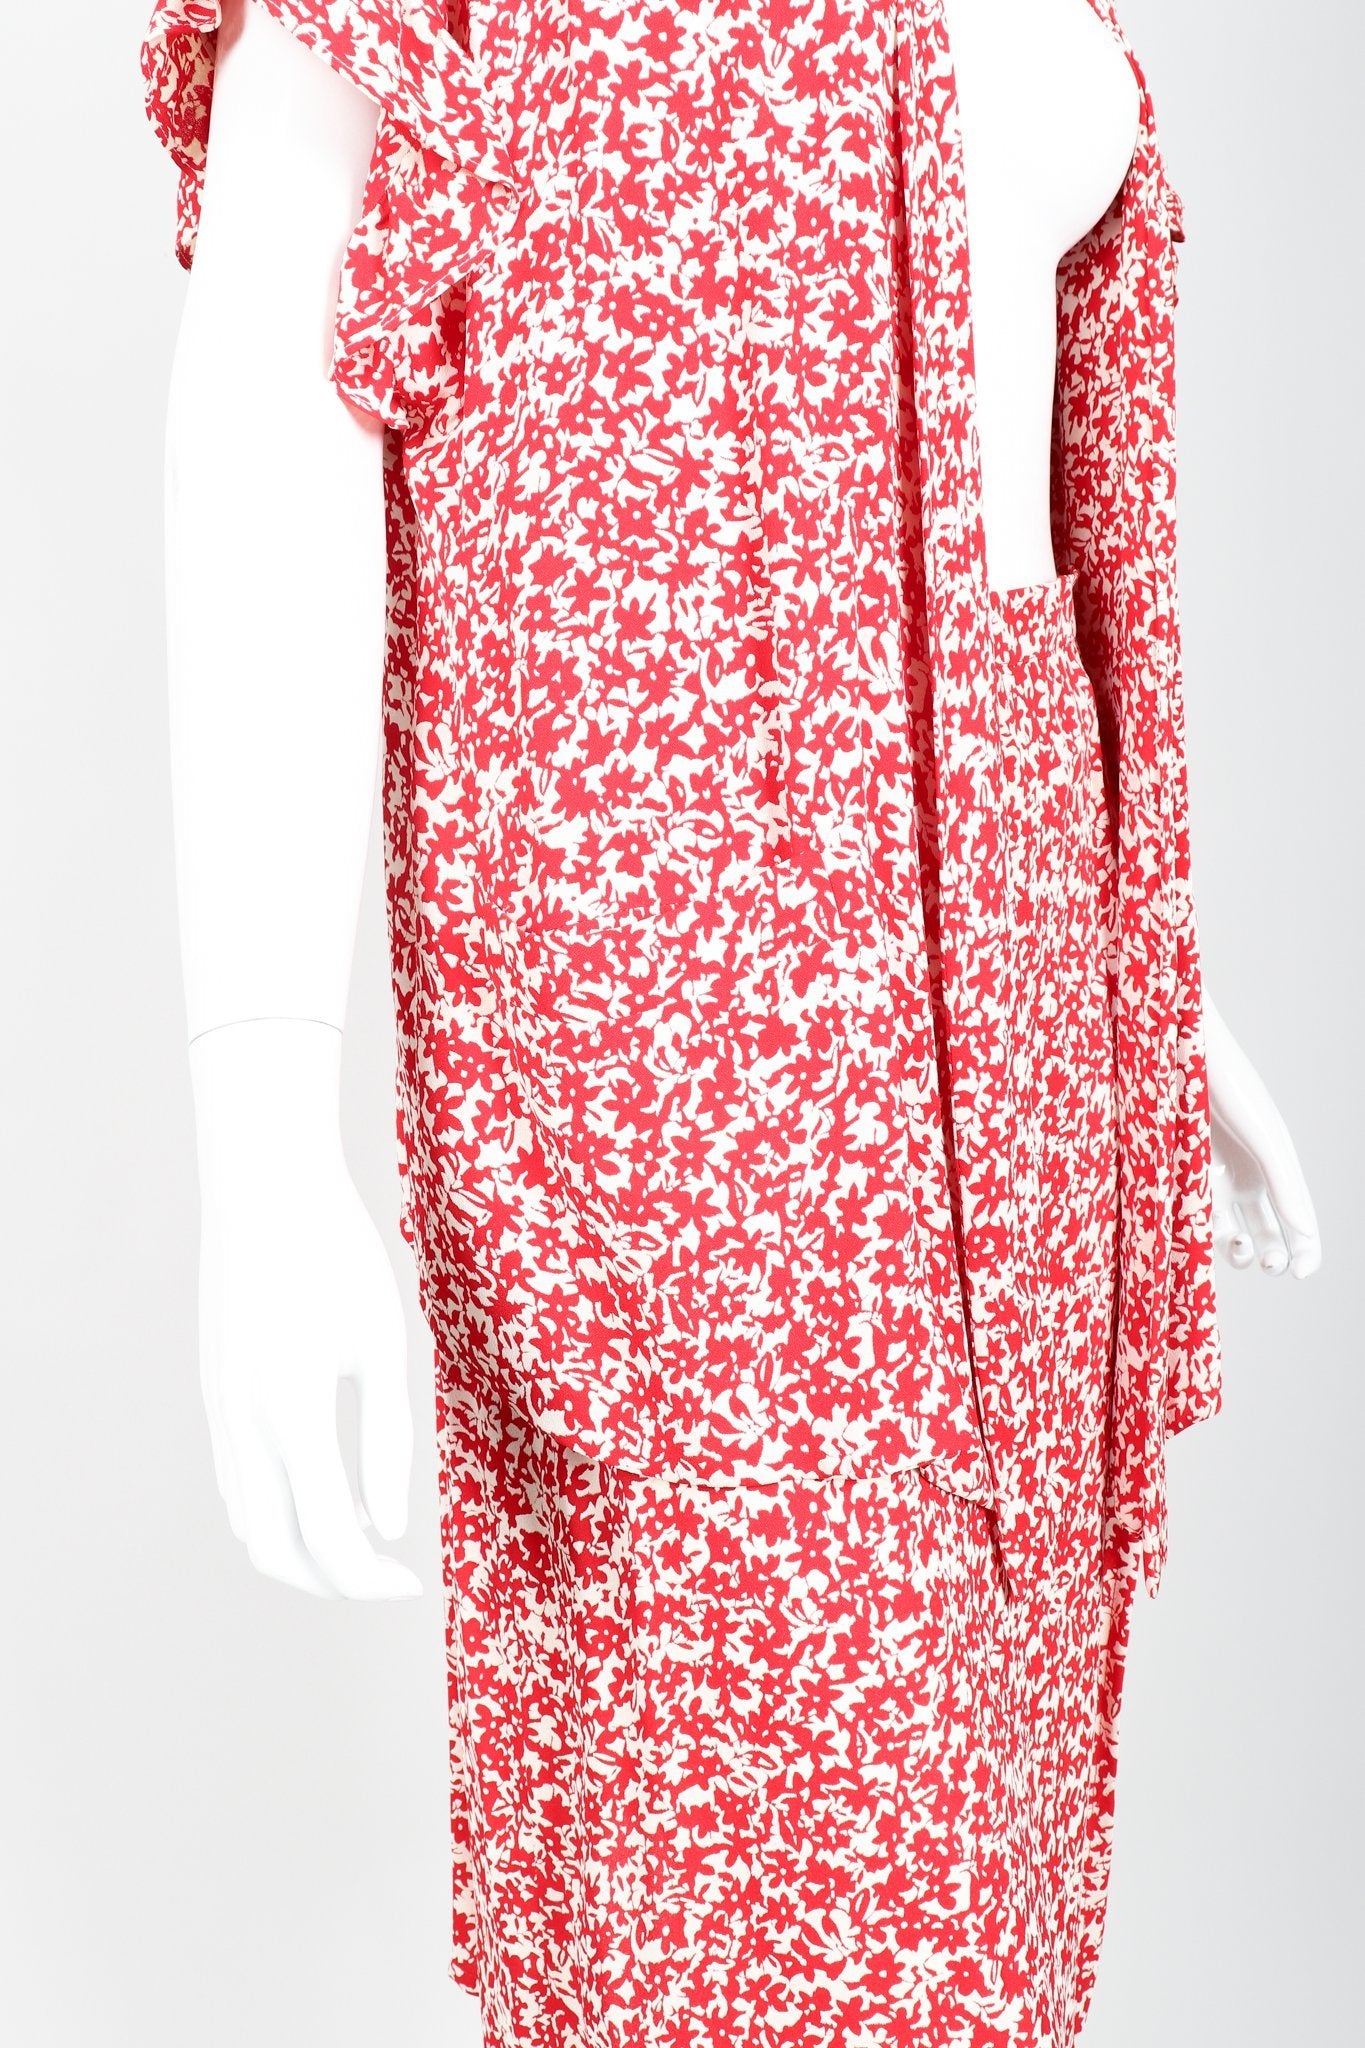 Vintage Sonia Rykiel Graphic Wraparound Top & Skirt Set Side Angled Crop Closeup at Recess